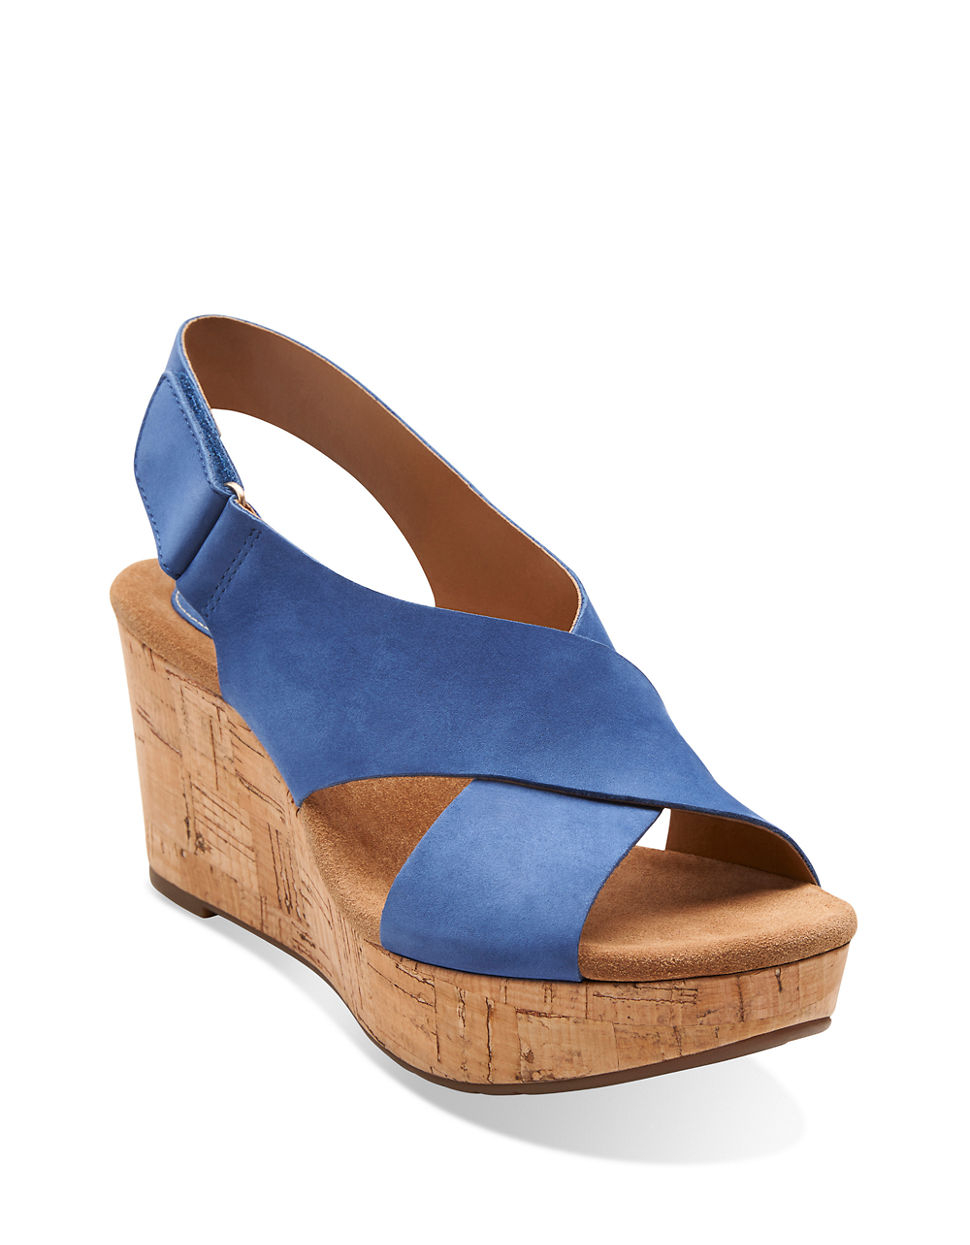 clarks blue wedge sandals